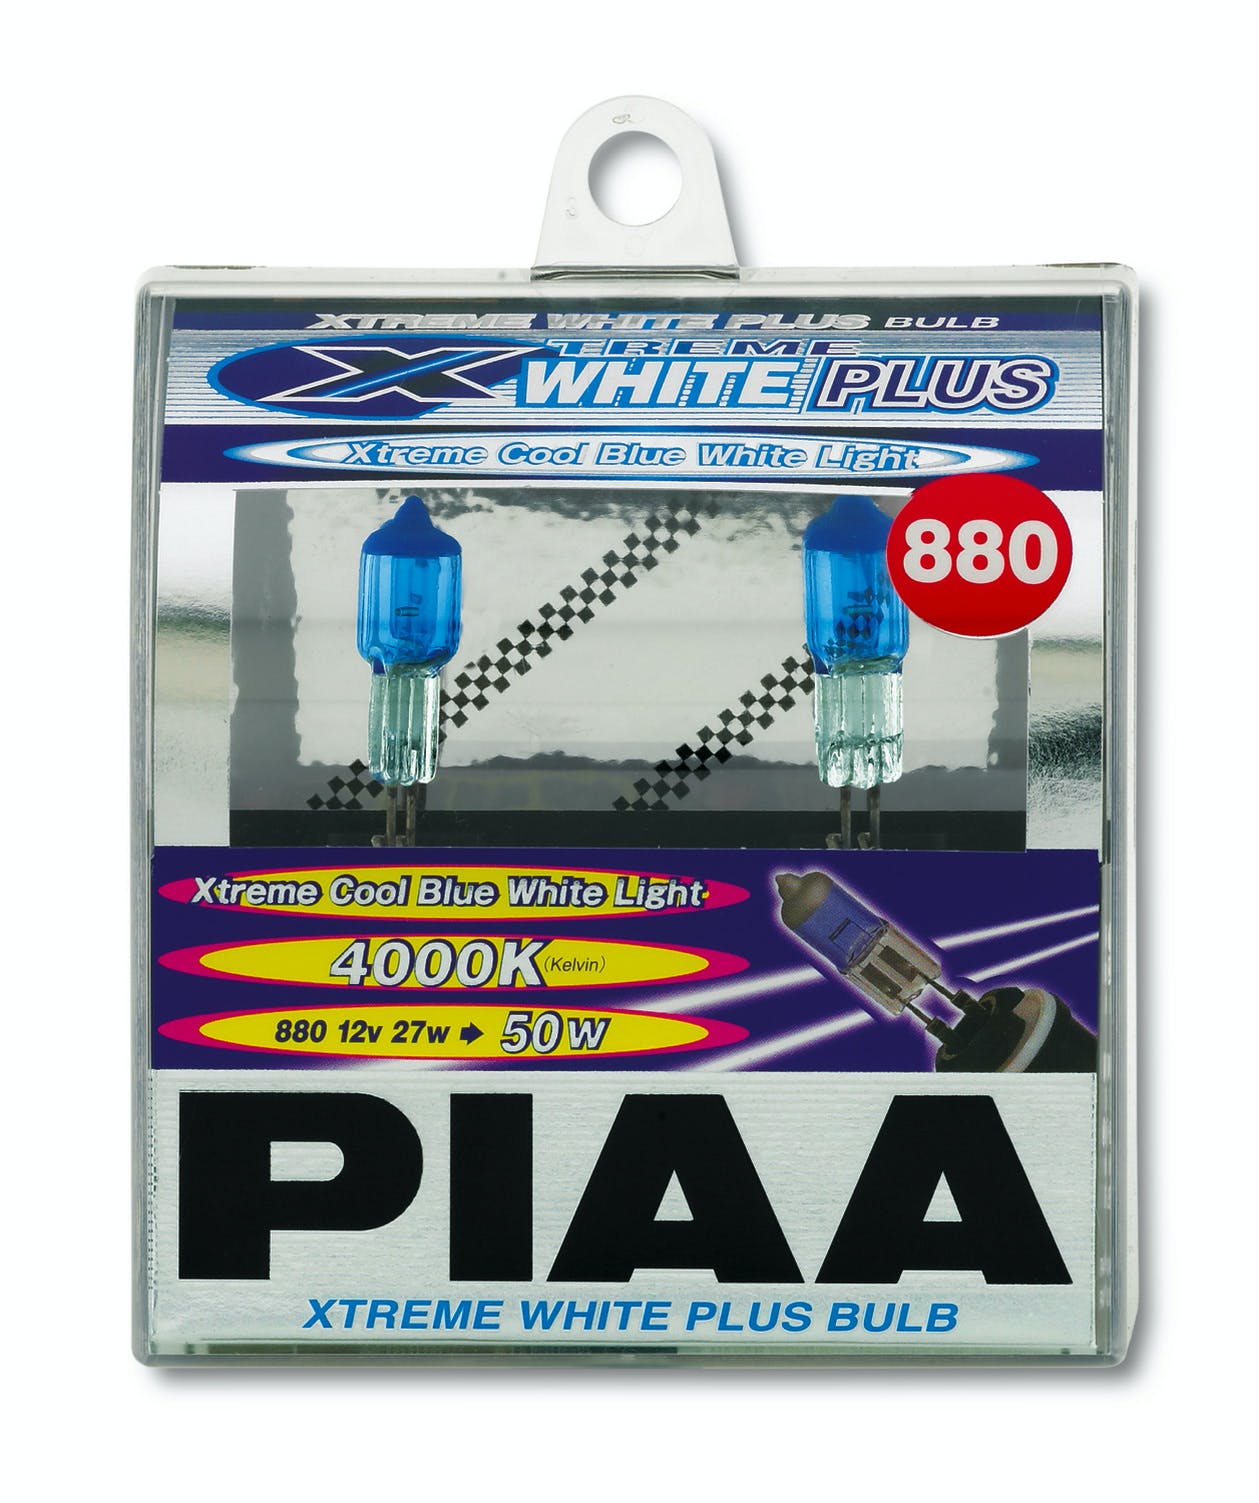 PIAA 18880 880 Xtreme White Plus Twin Pack Halogen Bulbs